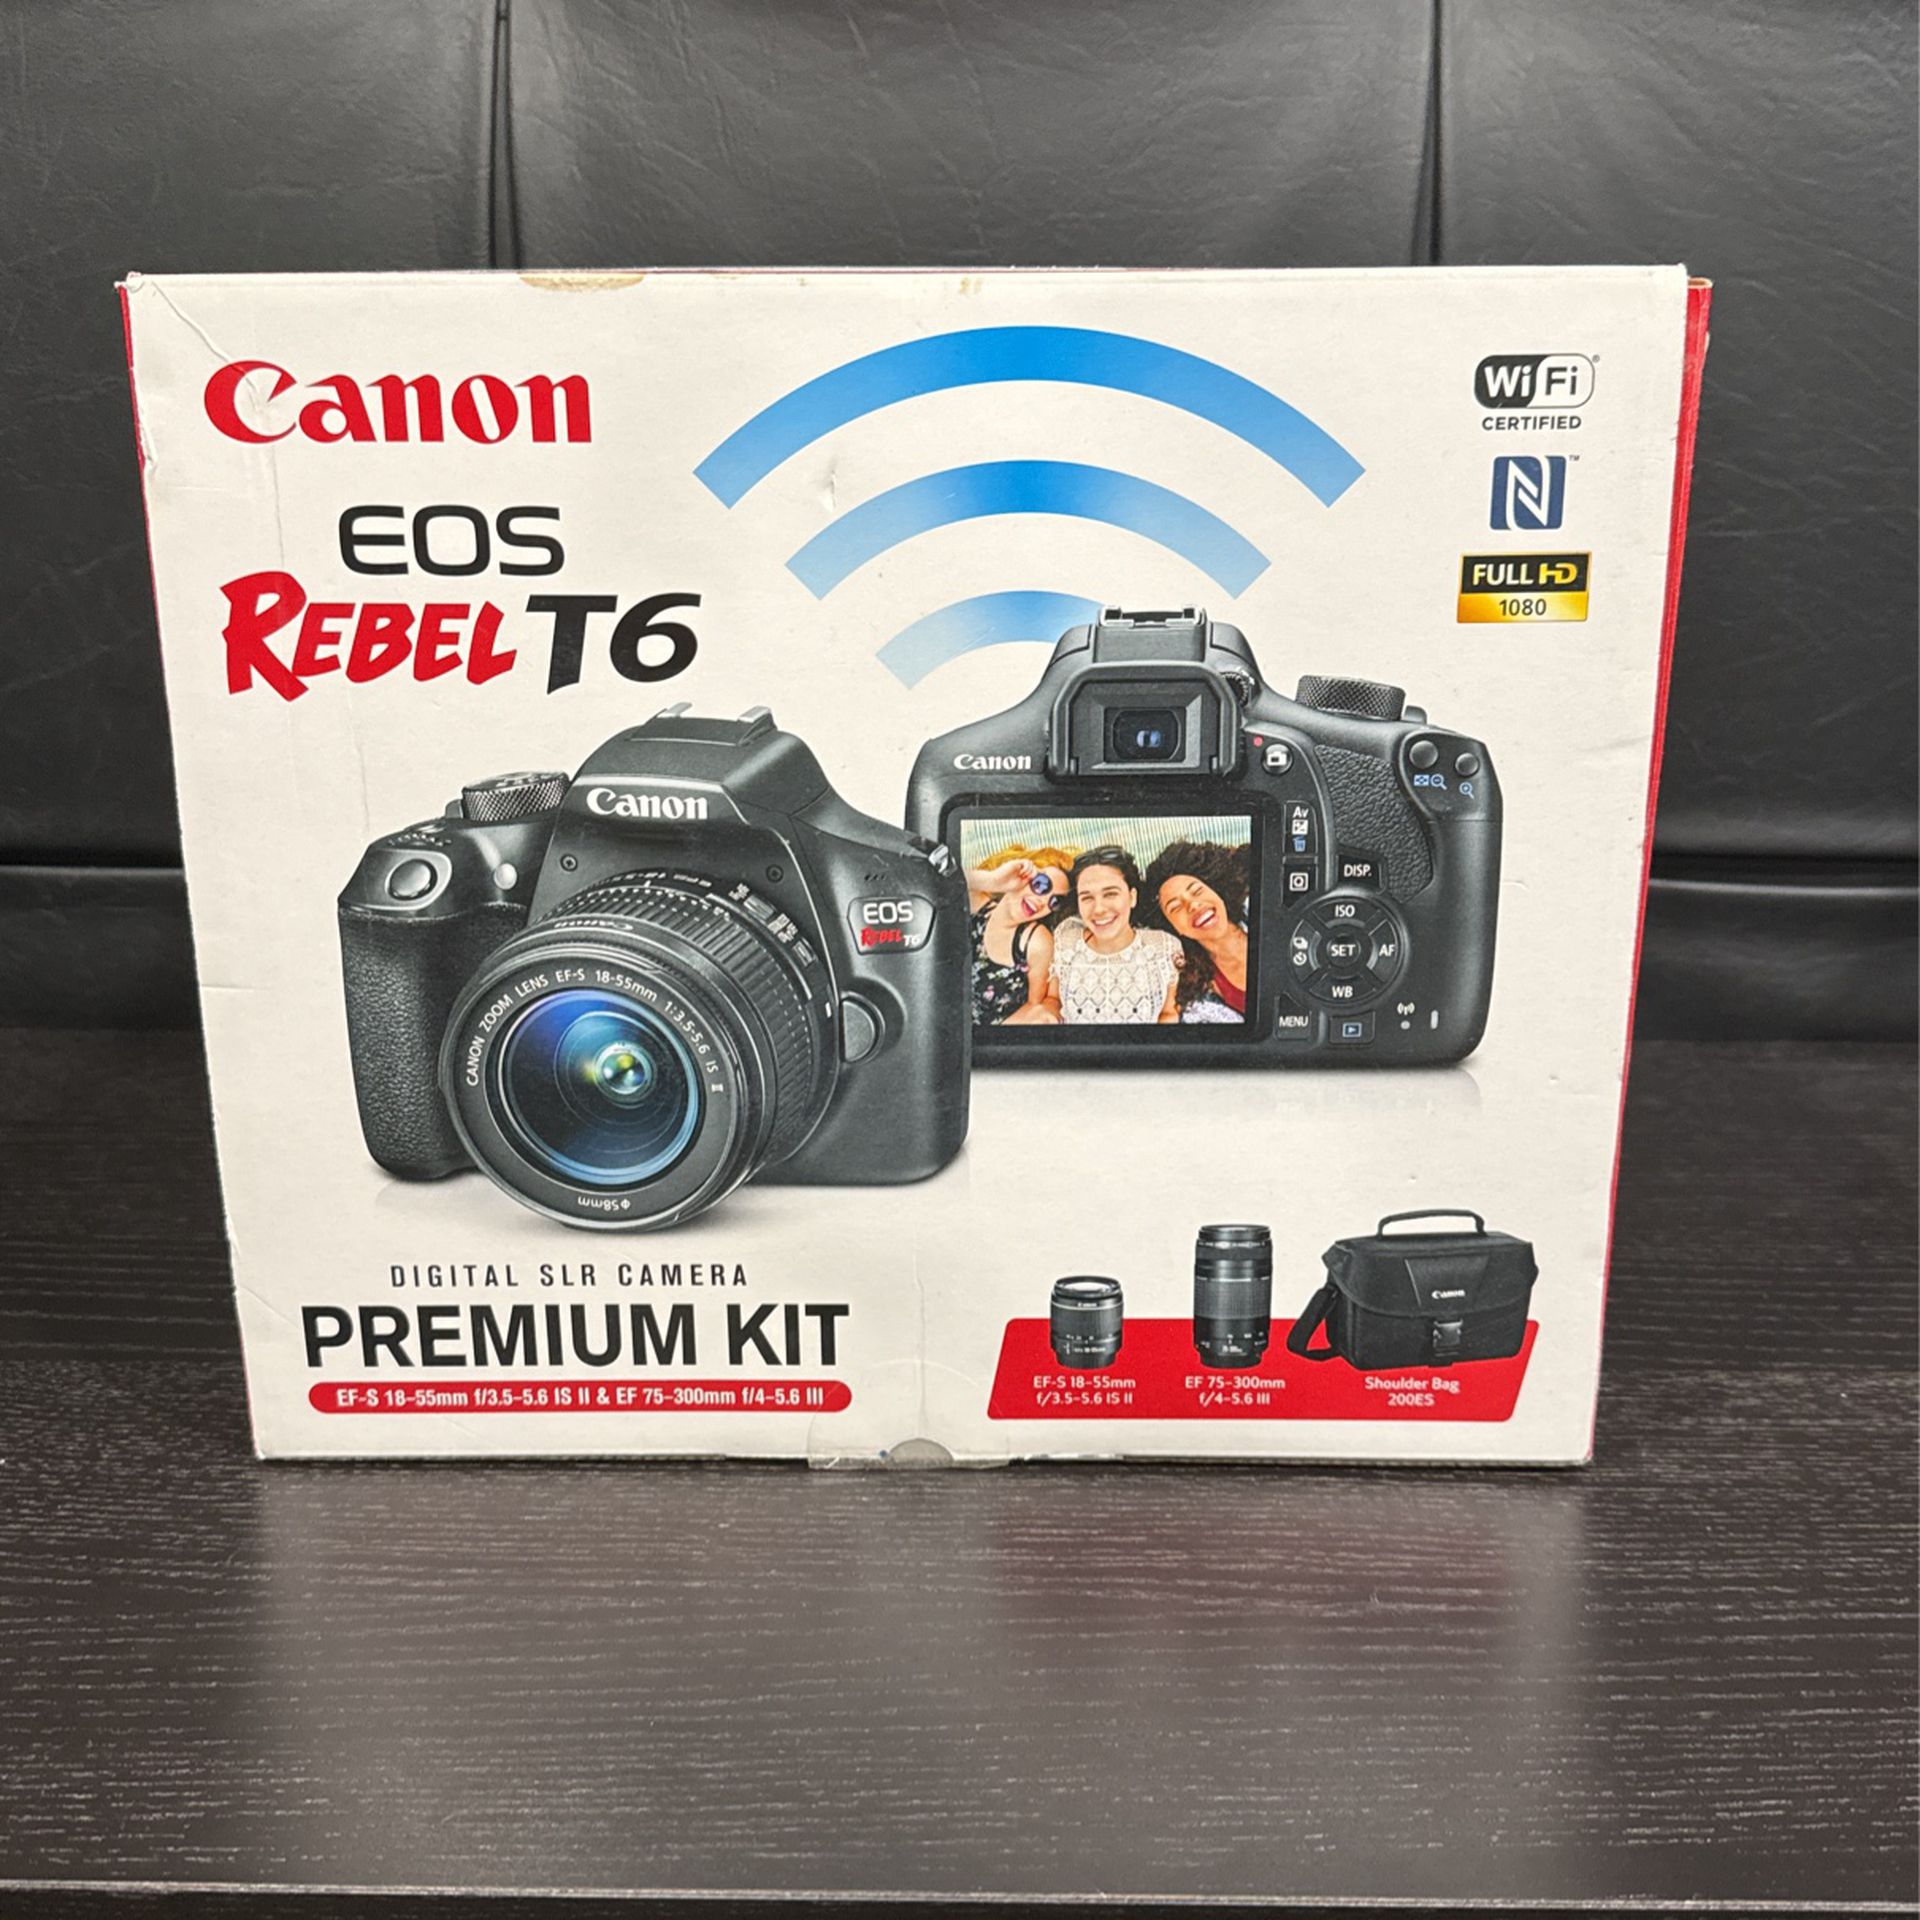 Canon Eos Rebel T6 Premium kit